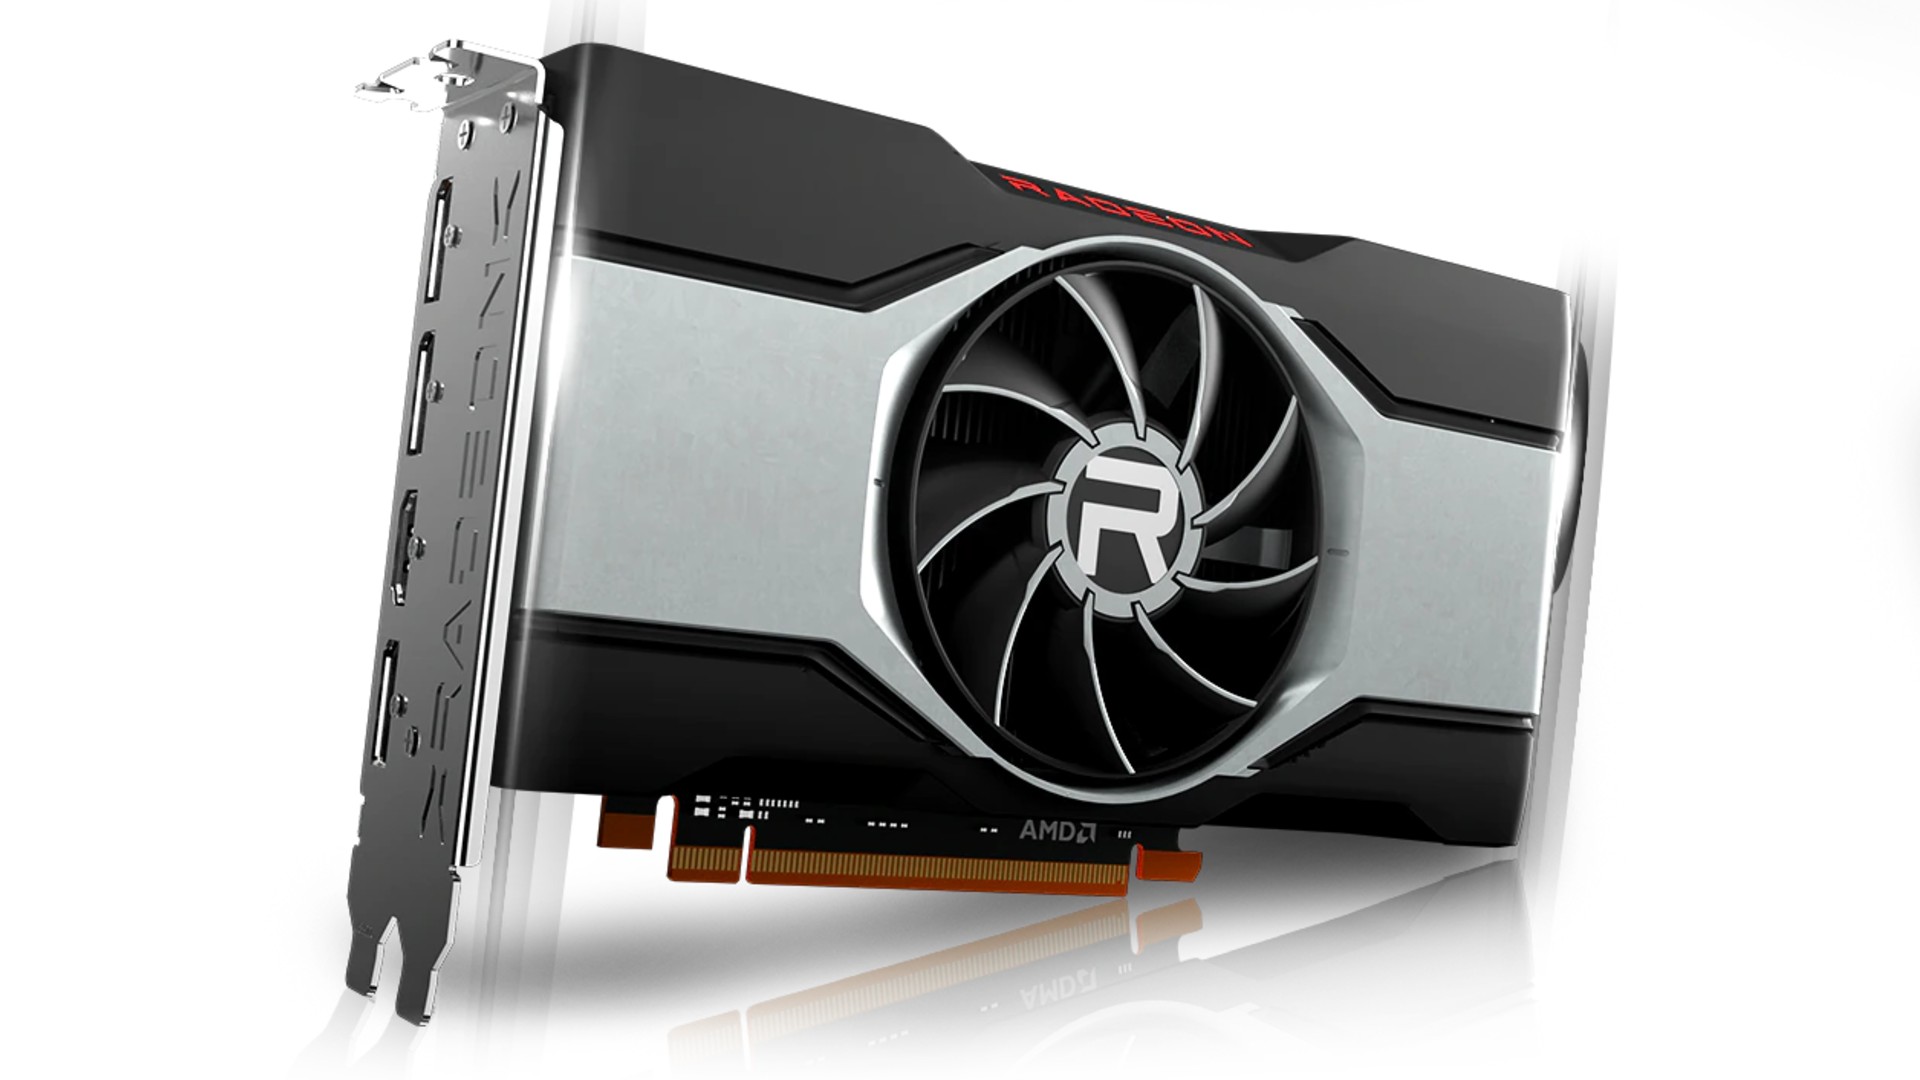 AMD rete suum Radeon RX 6600 XT GPU, Nisl 1080p aleae pro $379